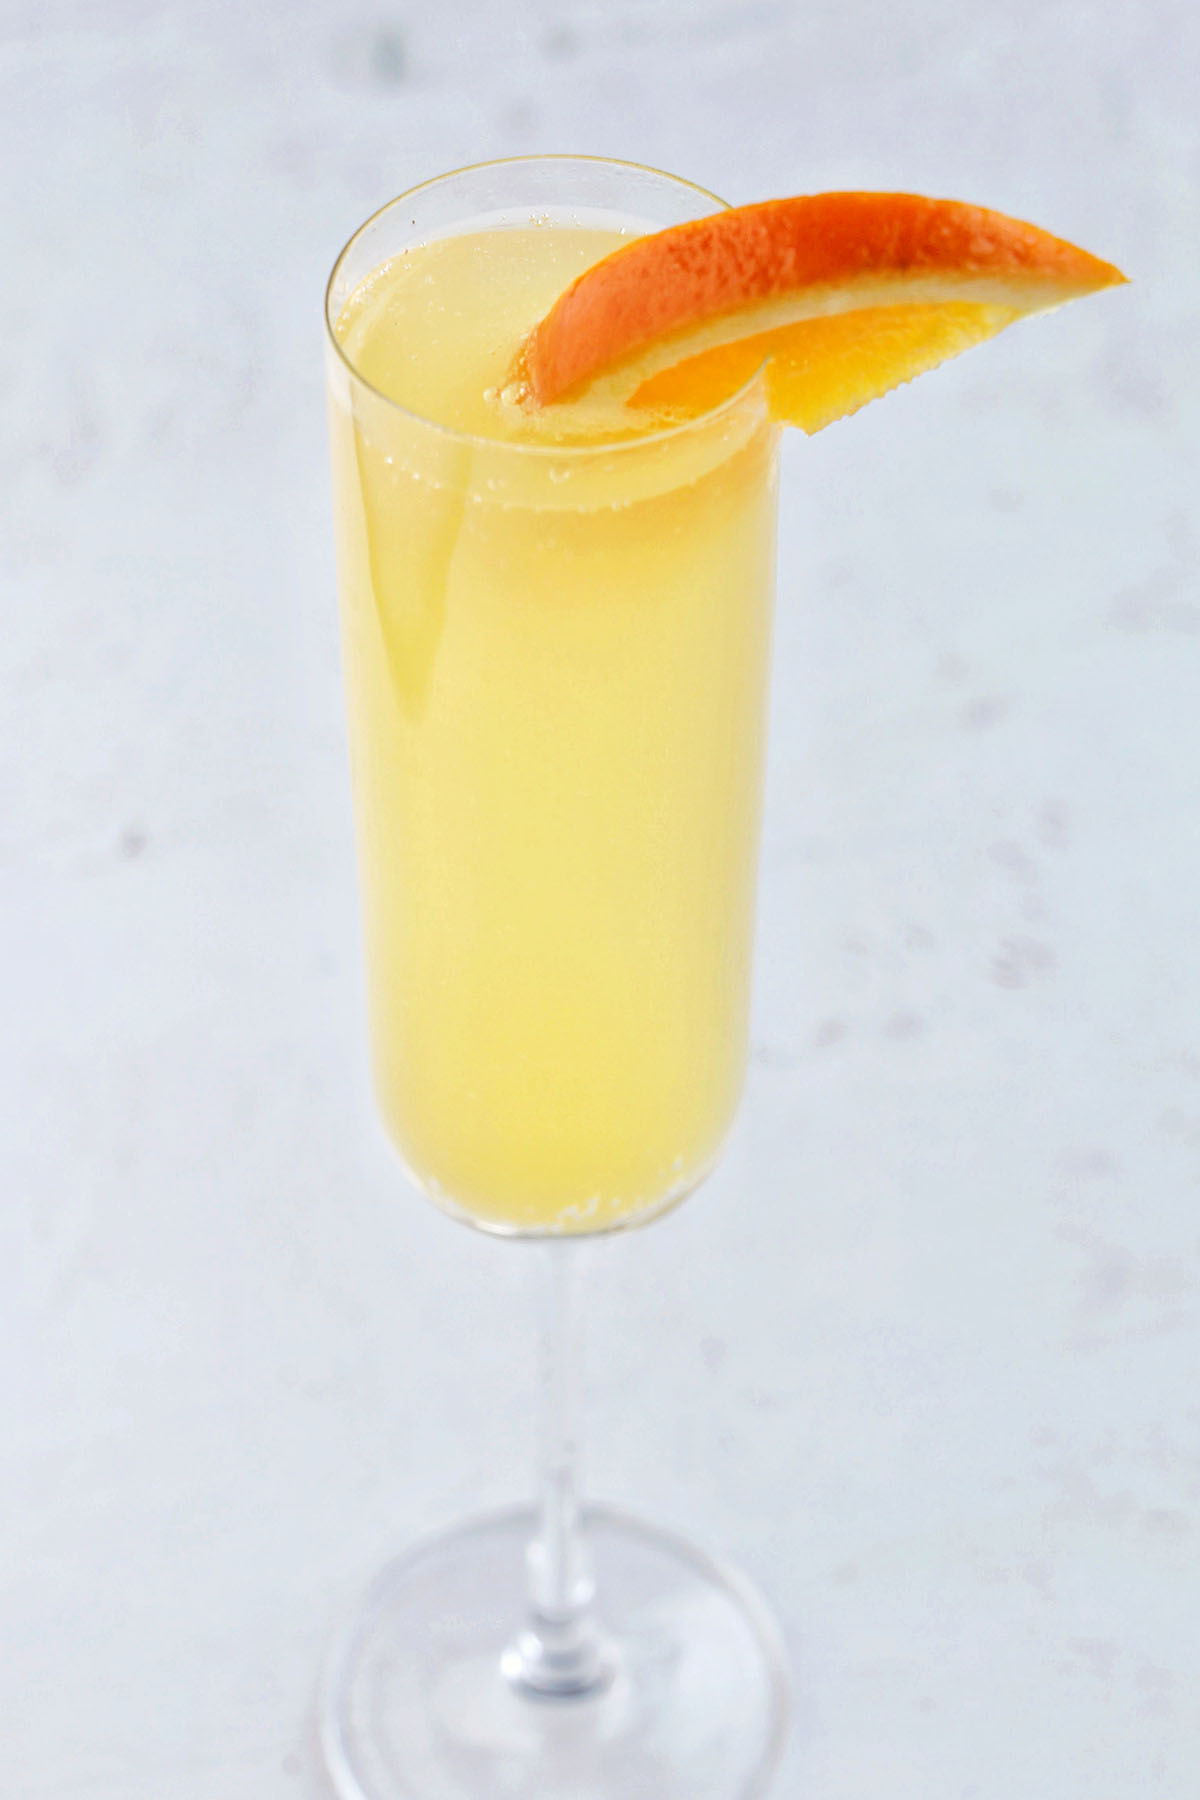 mimosa with orange garnish.